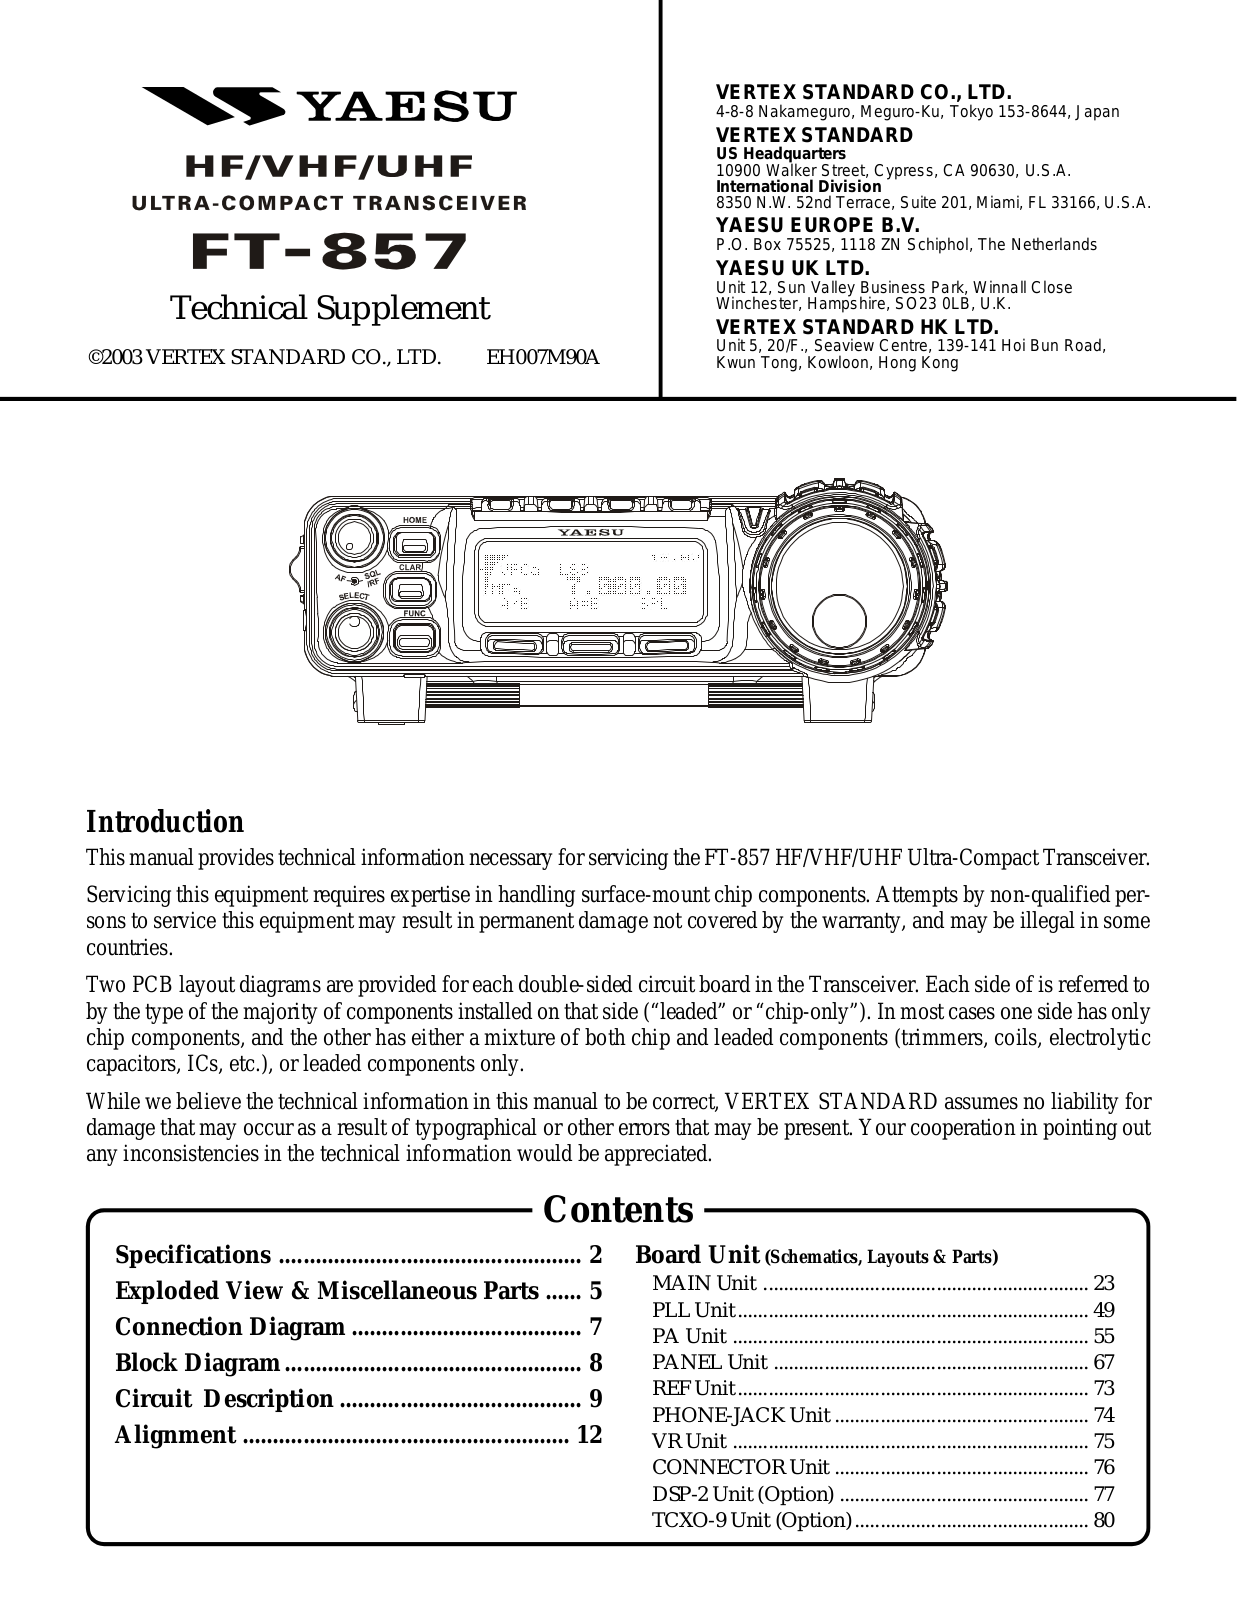 Yaesu FT-857 Service Manual